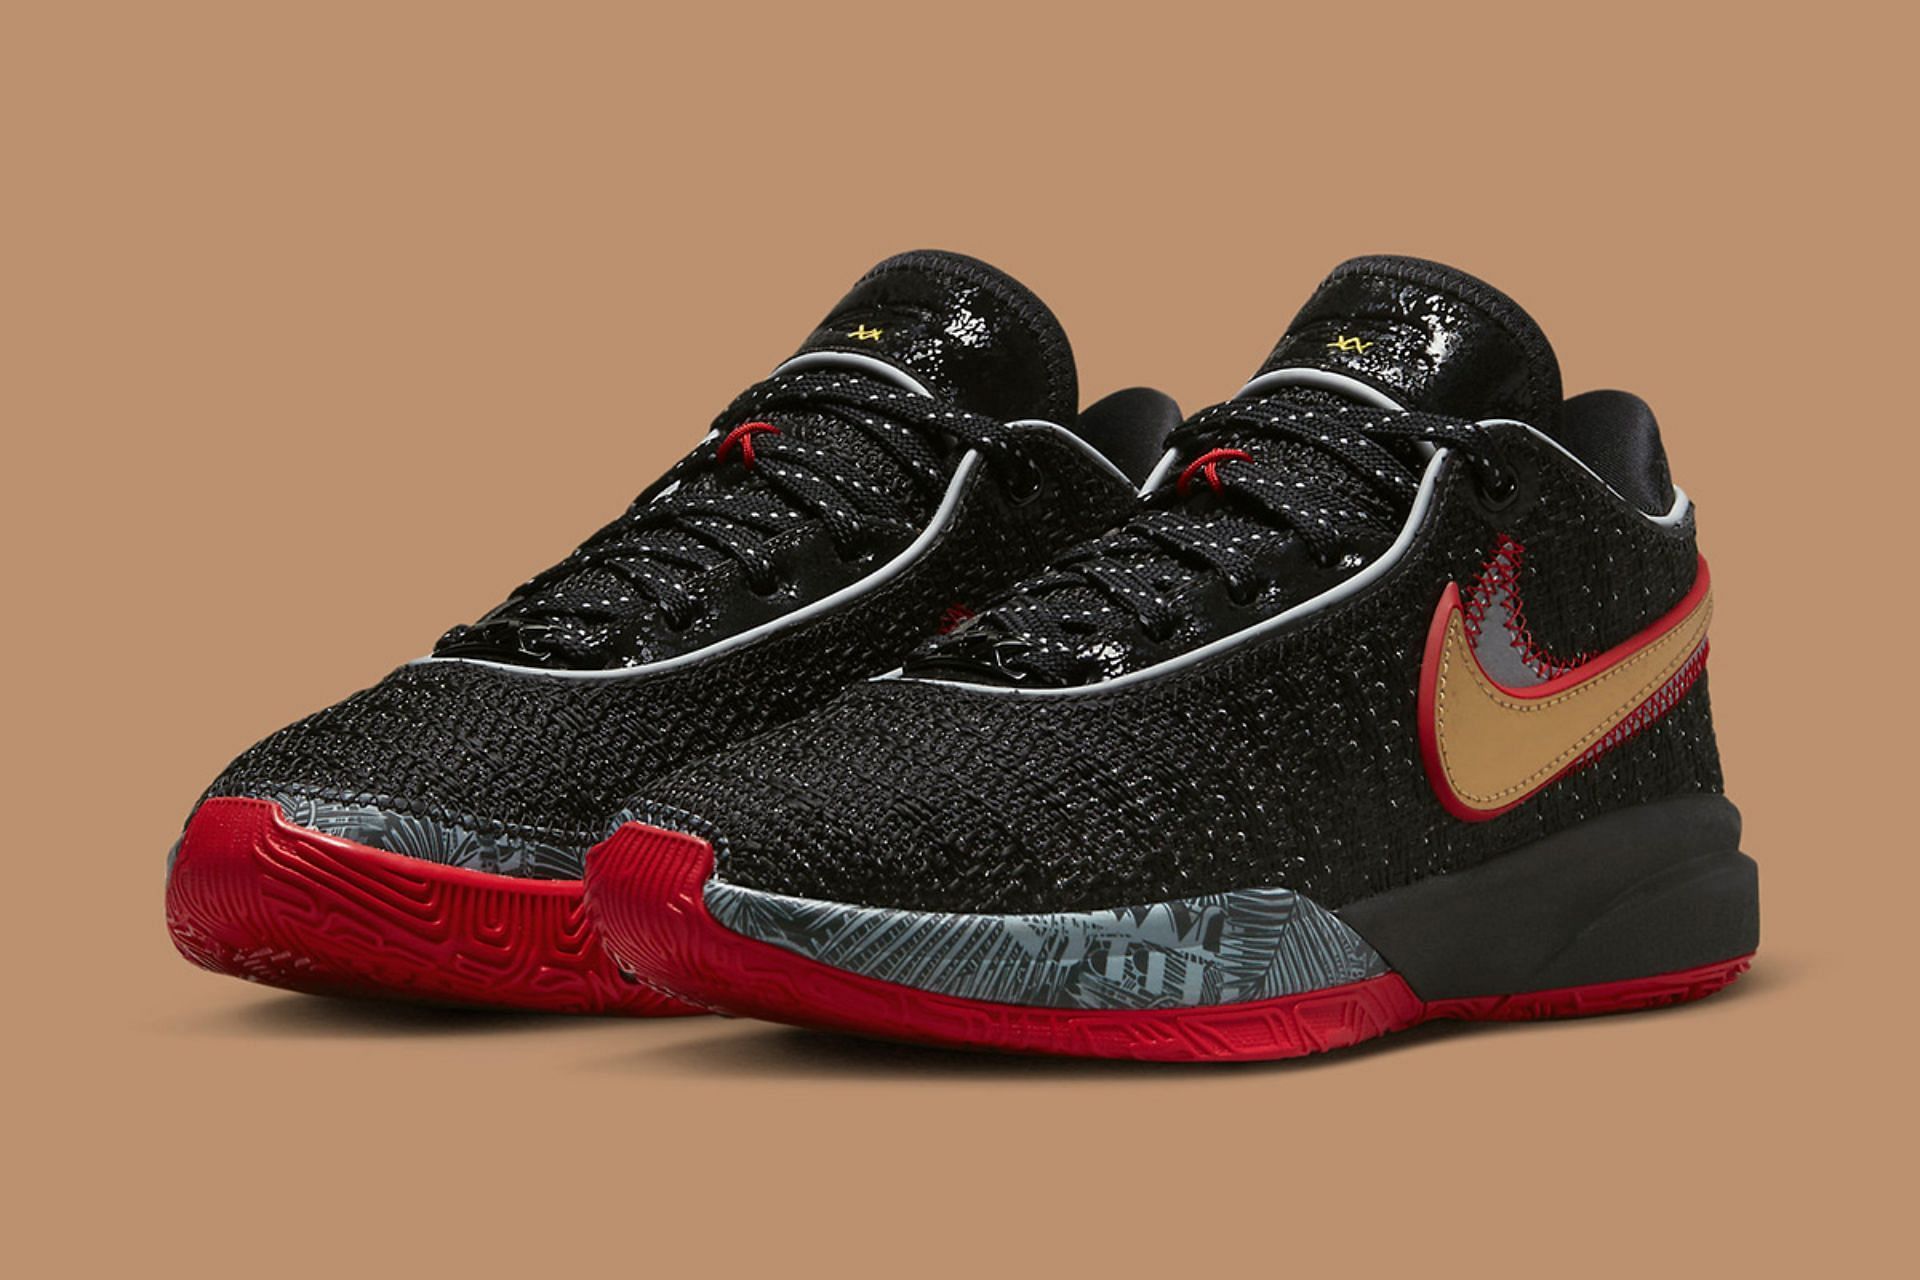 Nike LeBron 20 Miami Heat colorway (Image via Nike)